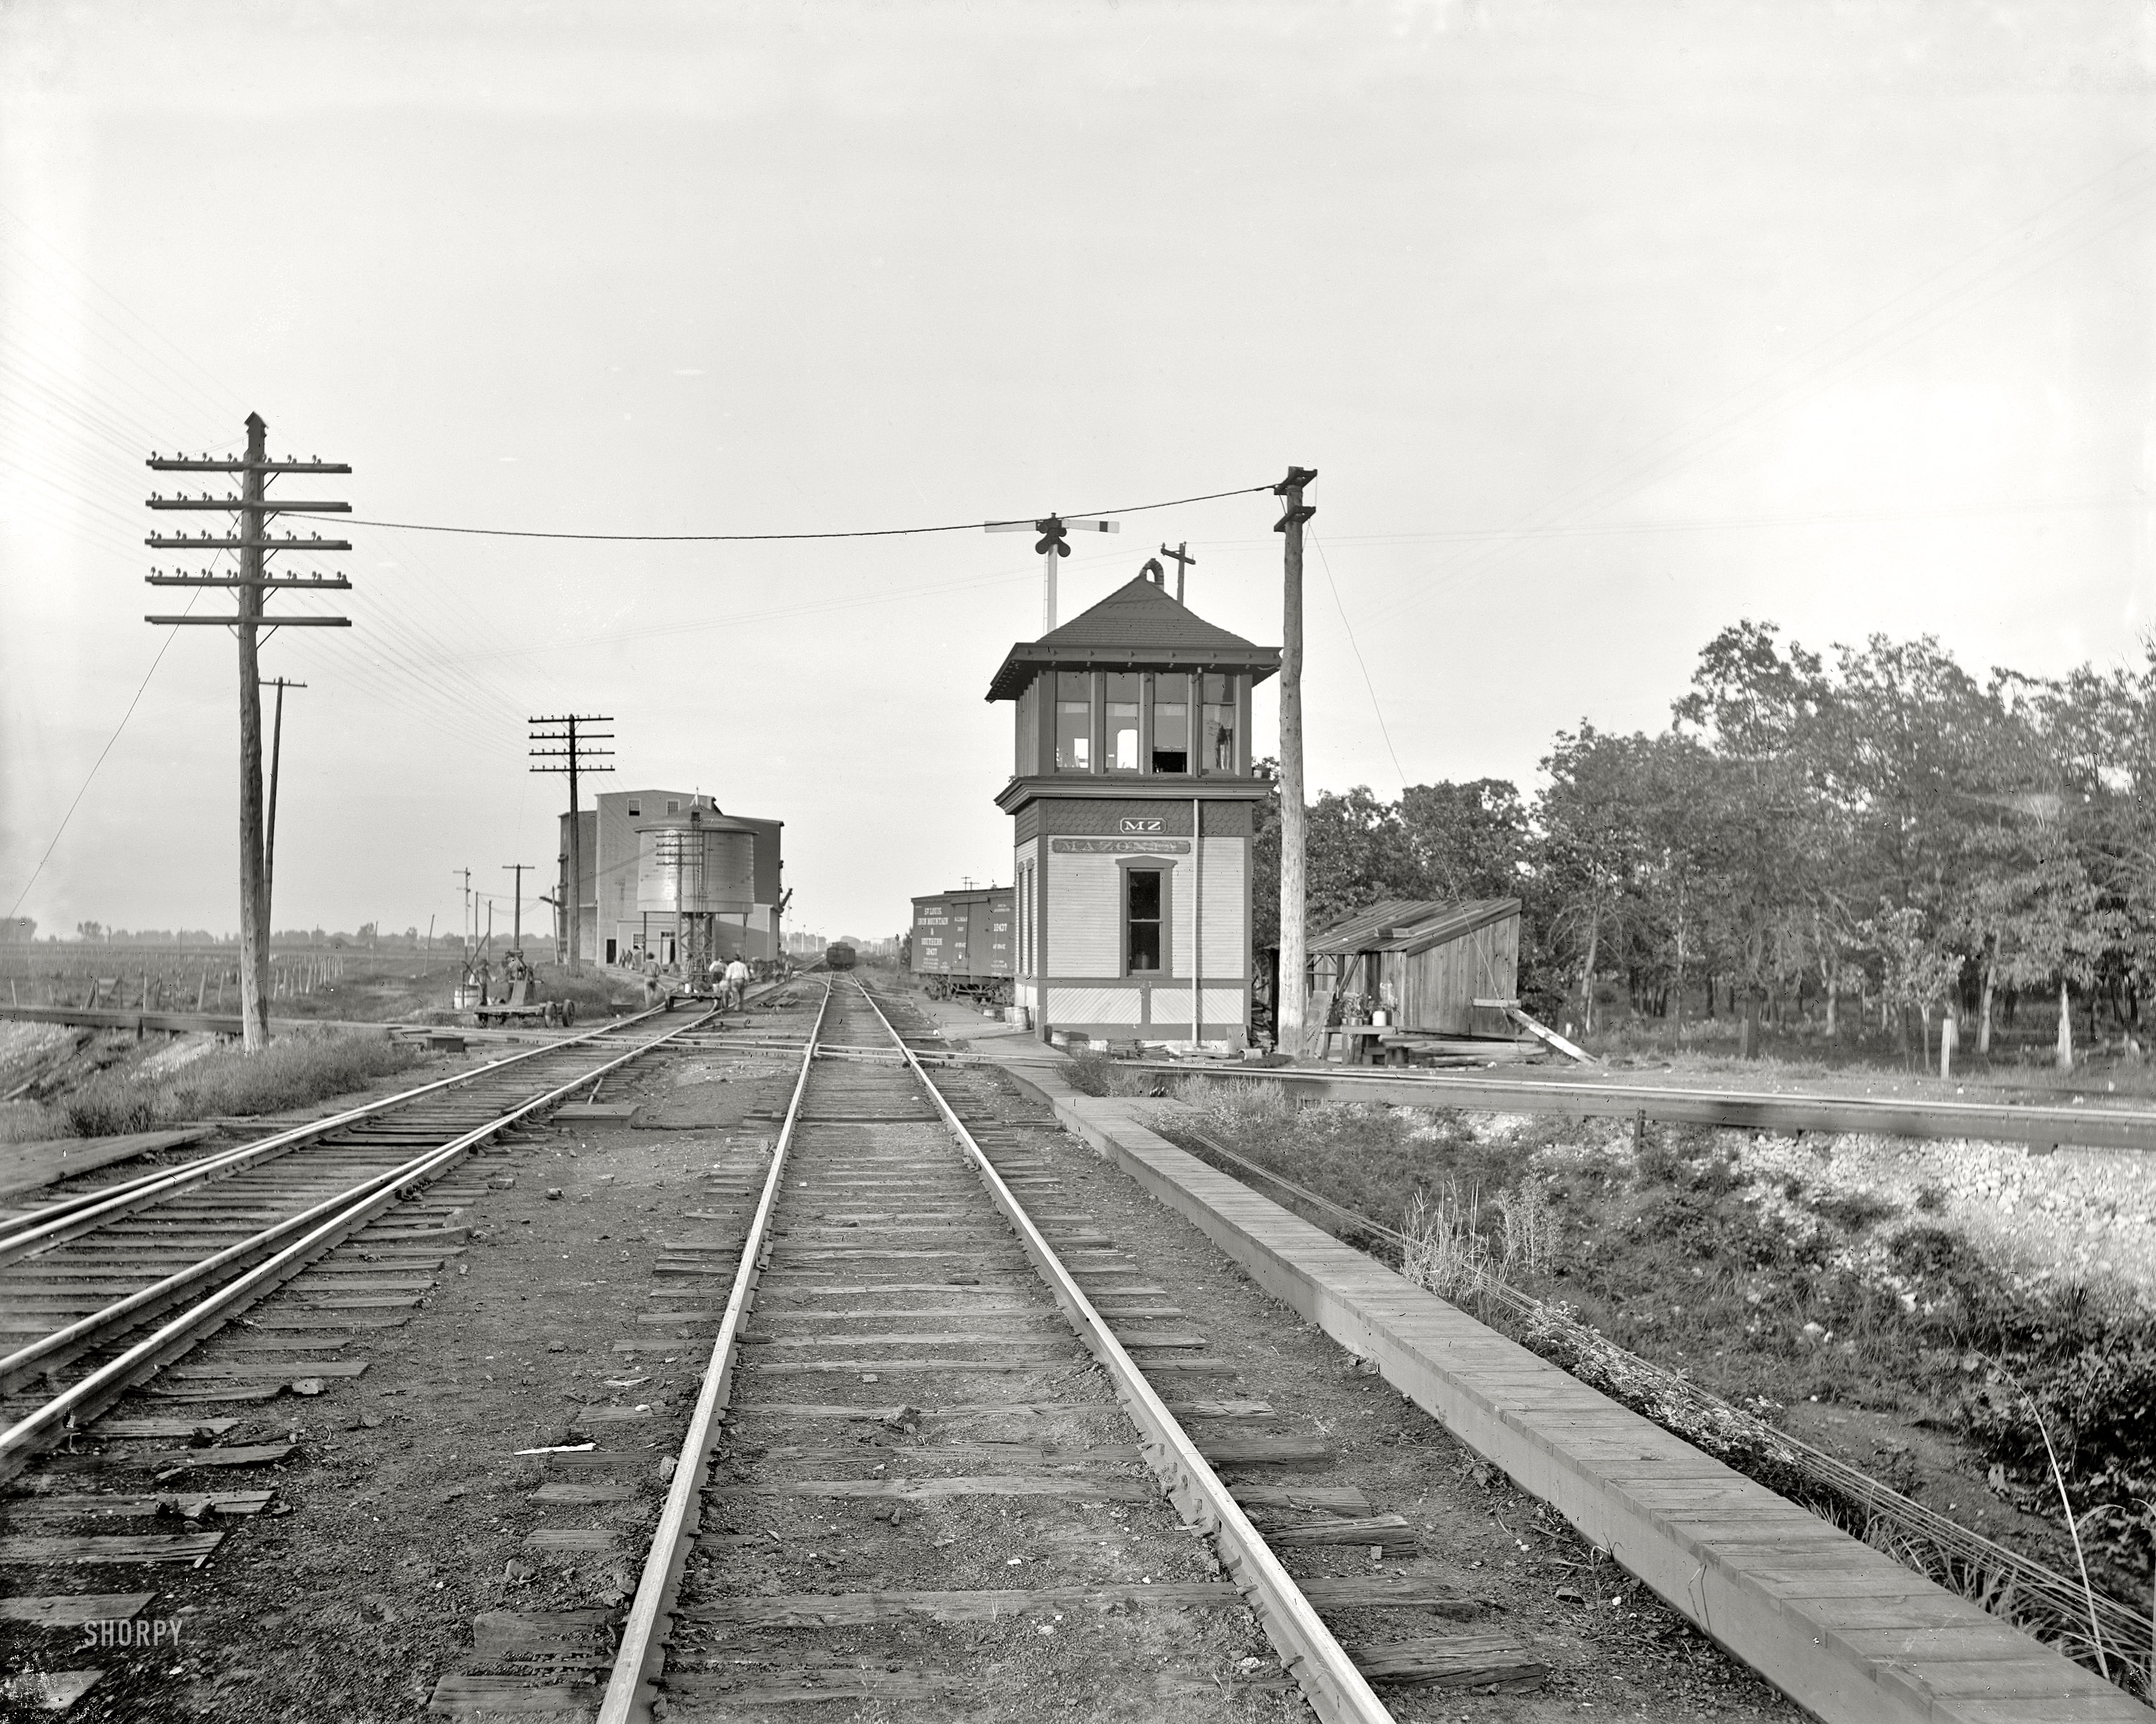 Circa 1900. "Chicago & Alton Railroad. Signal station and crossroads at Mazonia, Illinois." 8x10 inch glass negative, Detroit Publishing Co. View full size.